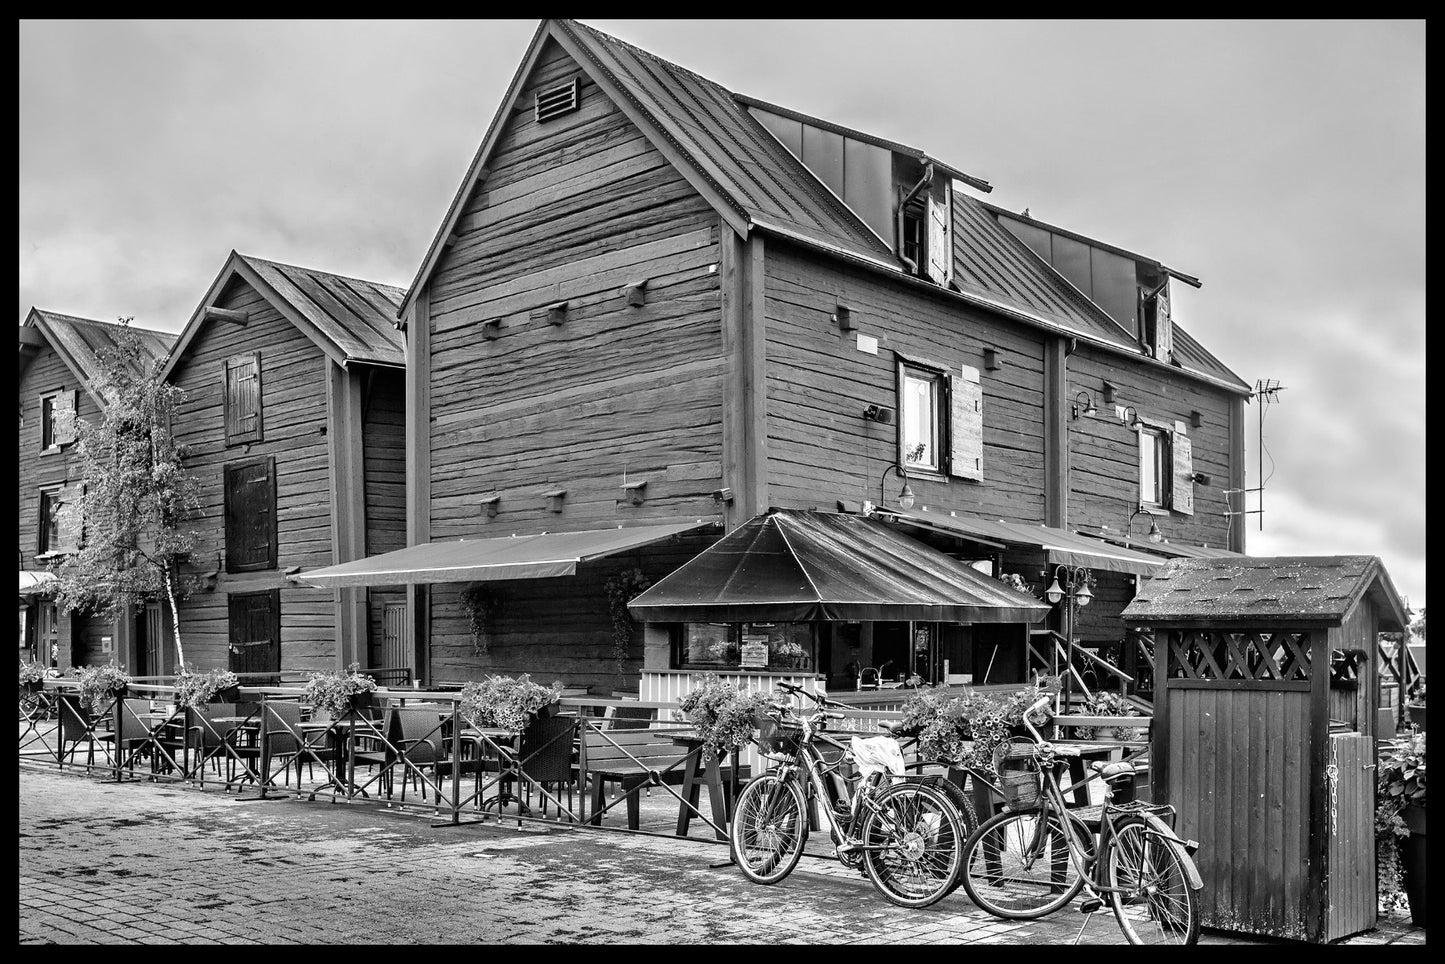  Oude houten huizen Oulu poster